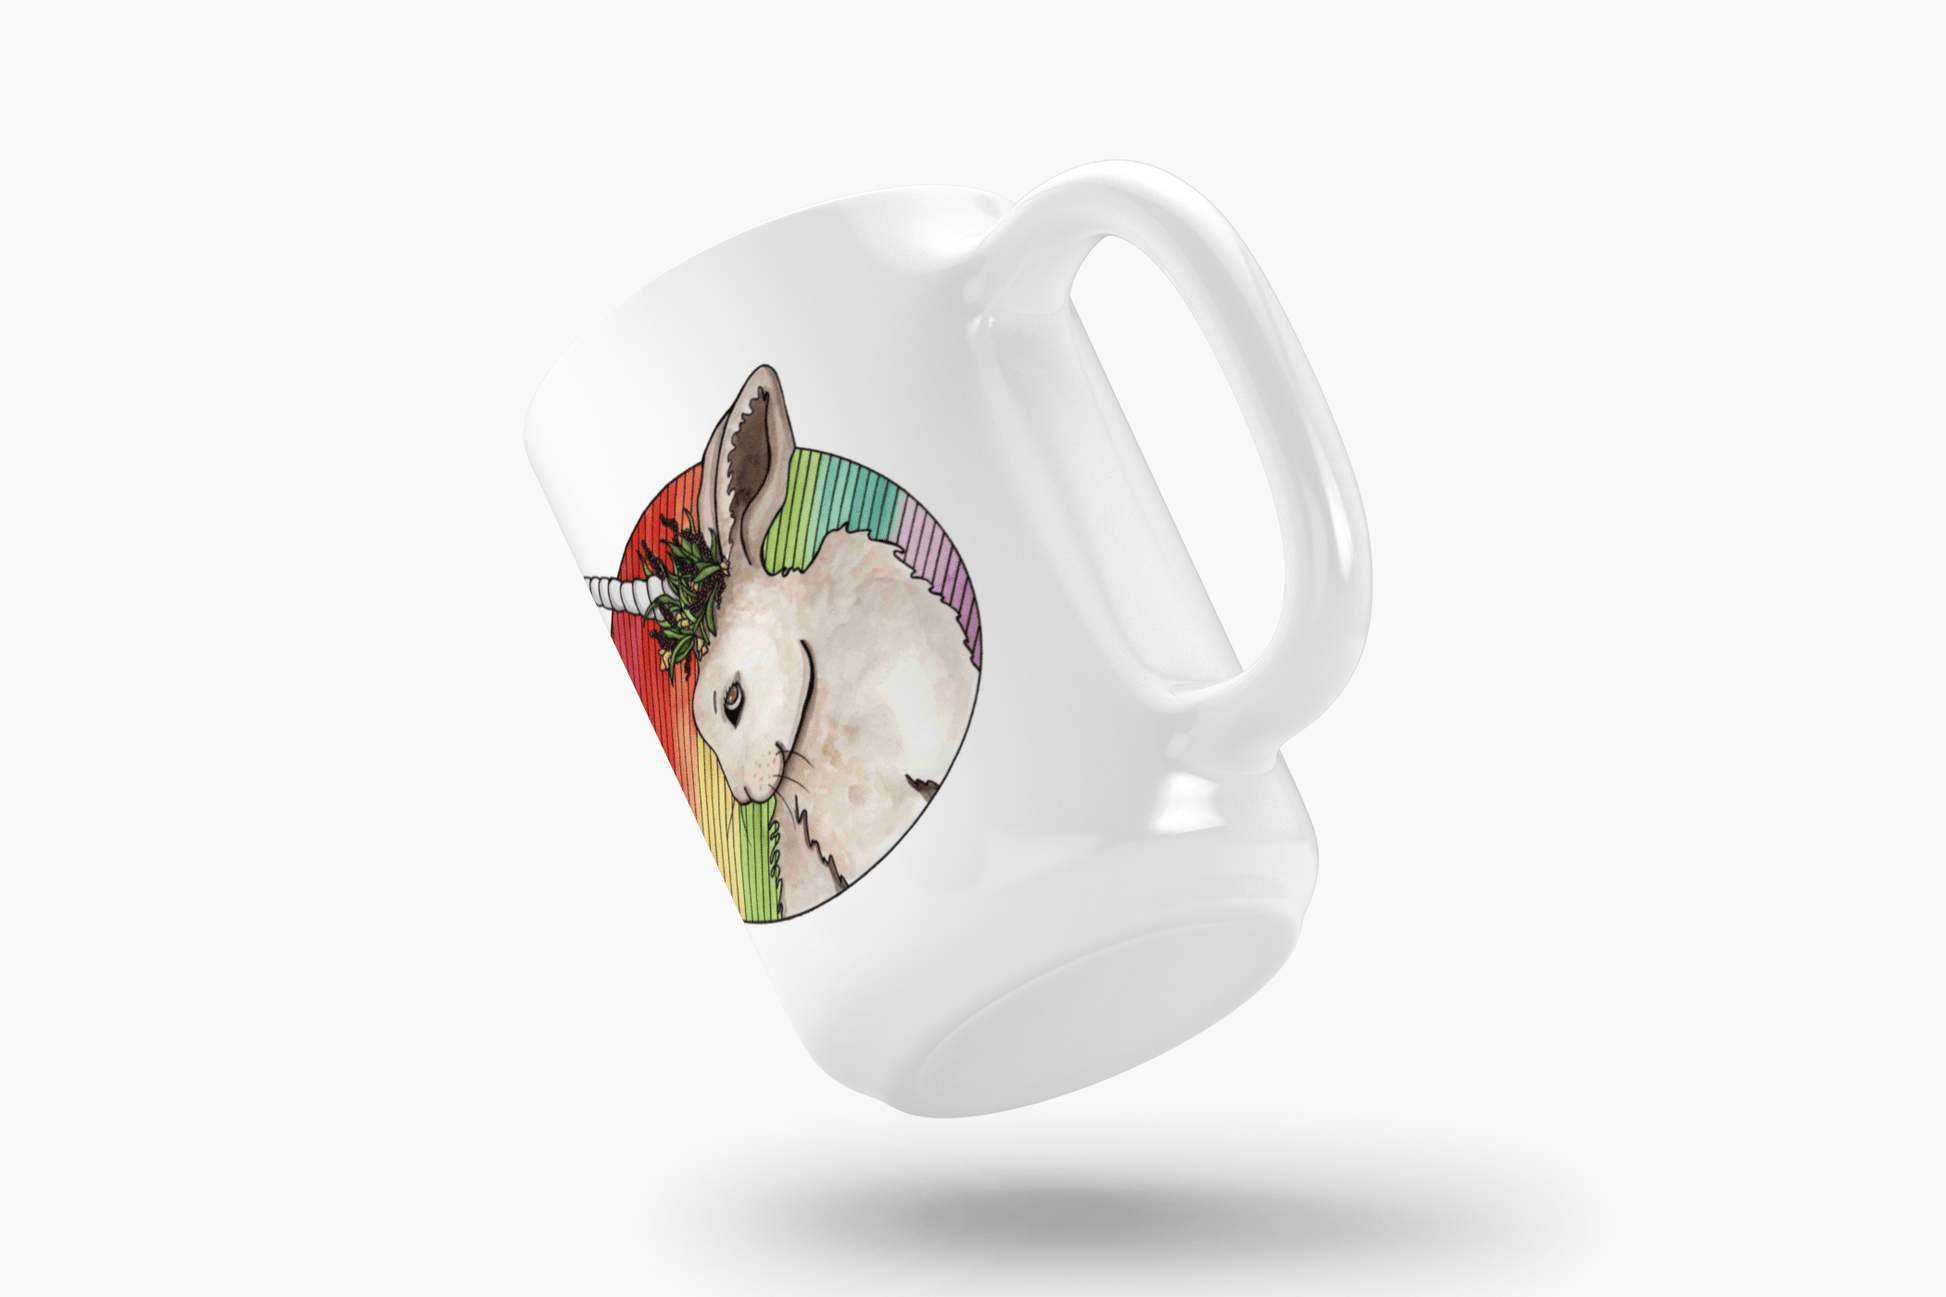 PinkPolish Design Coasters "Bunniicorn" 15oz Mug